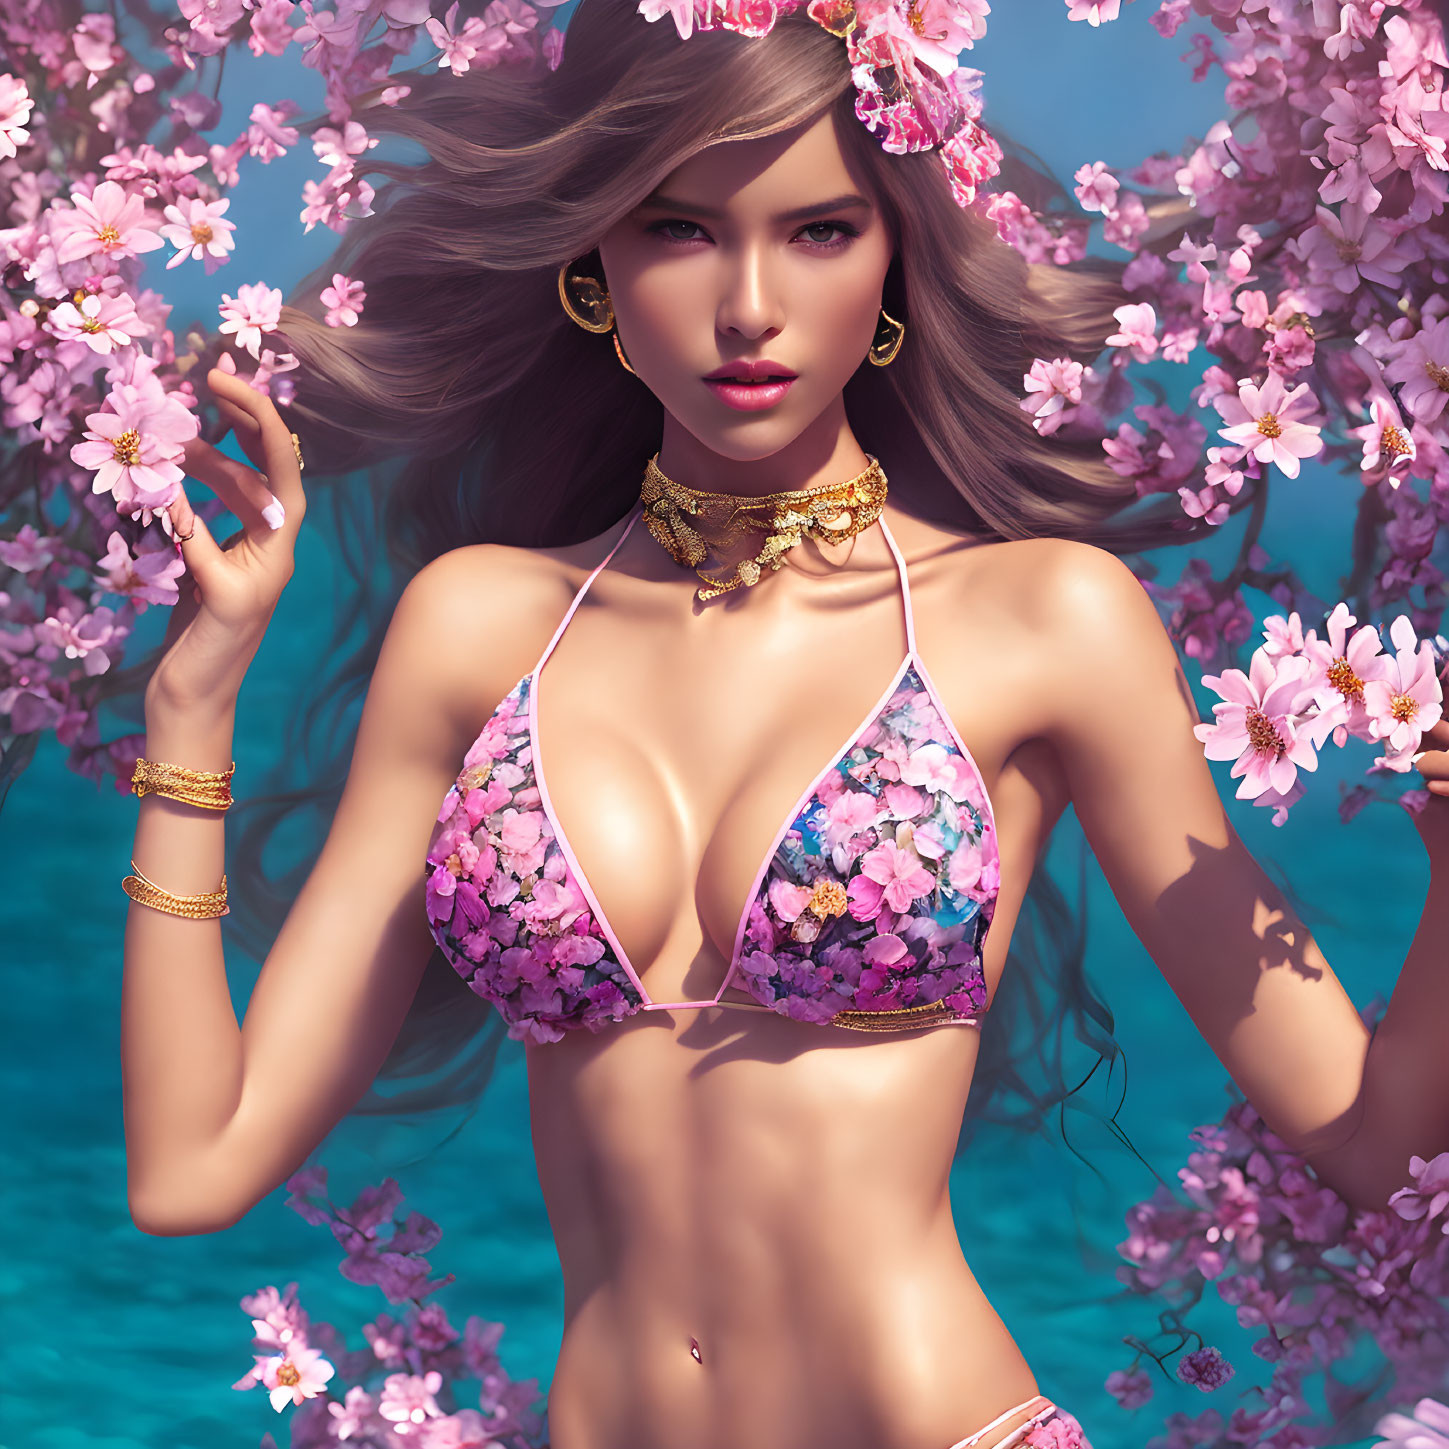 Digital artwork: Woman with cherry blossom hair, floral bikini, gold jewelry, in aquatic setting